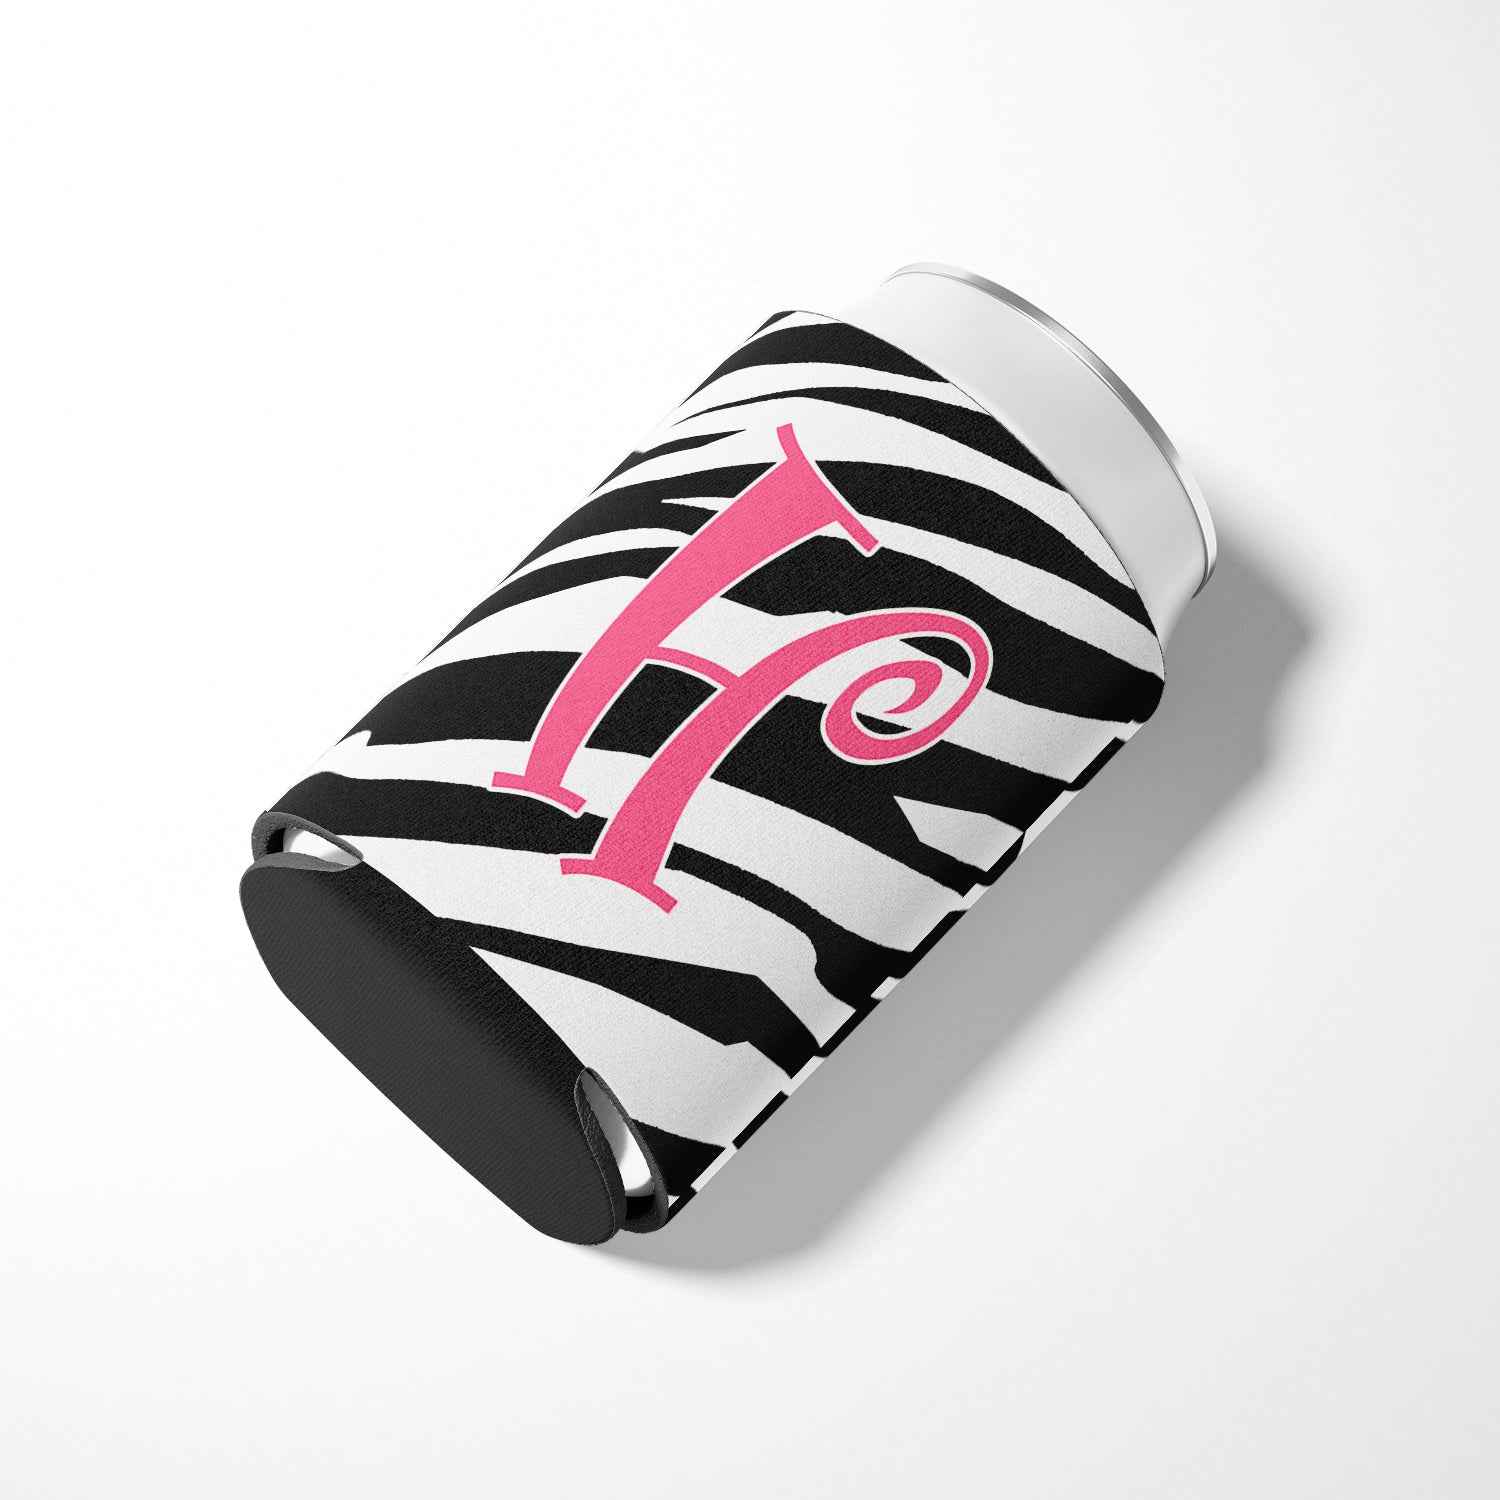 Letter H Initial Monogram - Zebra Stripe and Pink Can or Bottle Beverage Insulator Hugger.